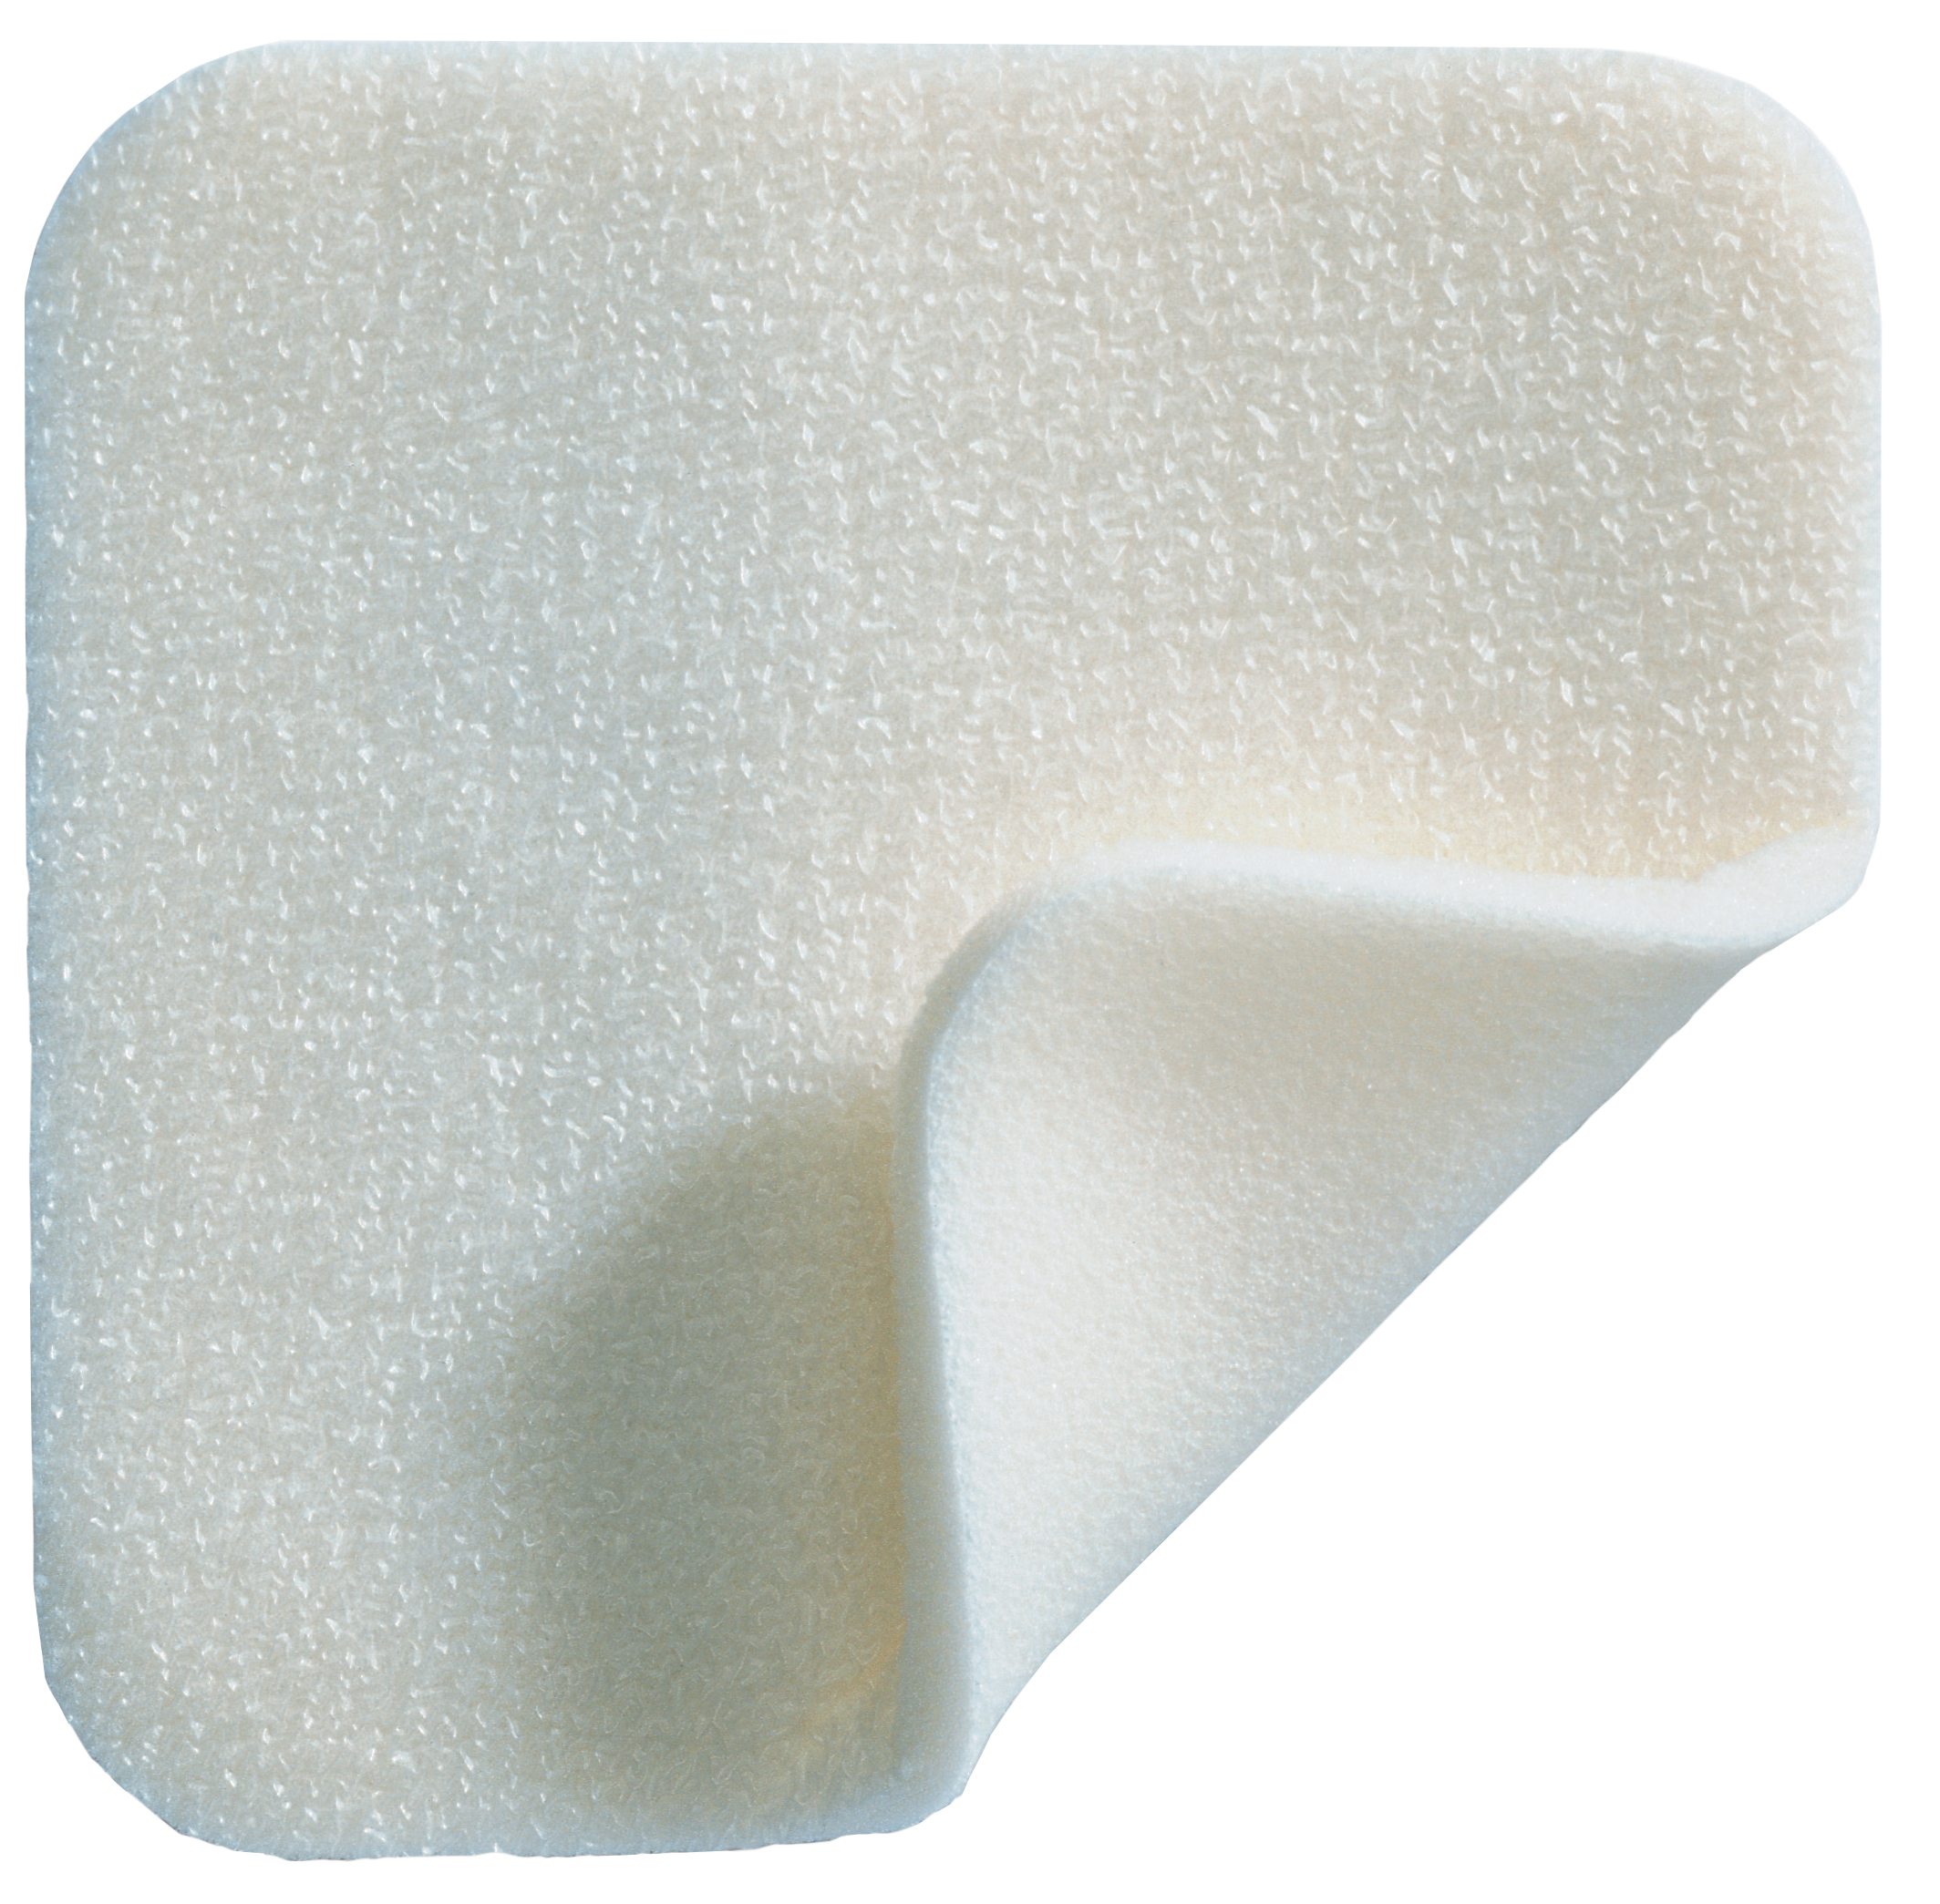 Mepilex Absorbent Foam Silicone Dressing 15cm x 15cm image 0